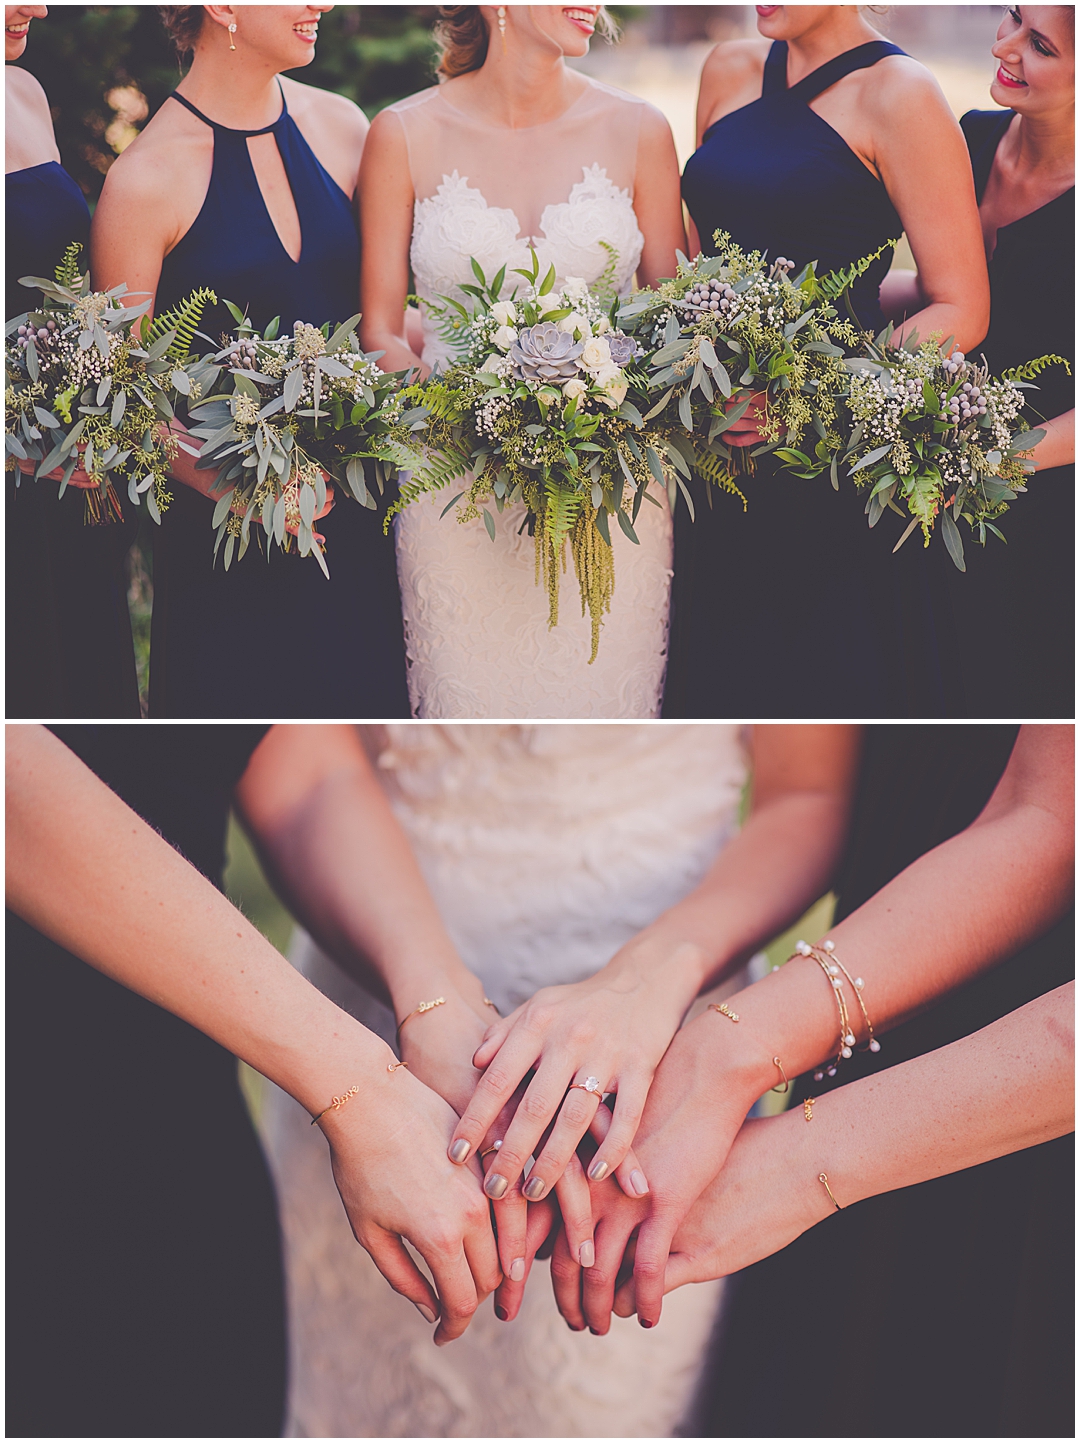 Kara Evans - Kara Evans Photographer - Central Illinois Wedding Photographer - Wedding Wednesday - Wedding Blogger - Bridesmaids Gifts - Gift Ideas for Your Bridesmaids